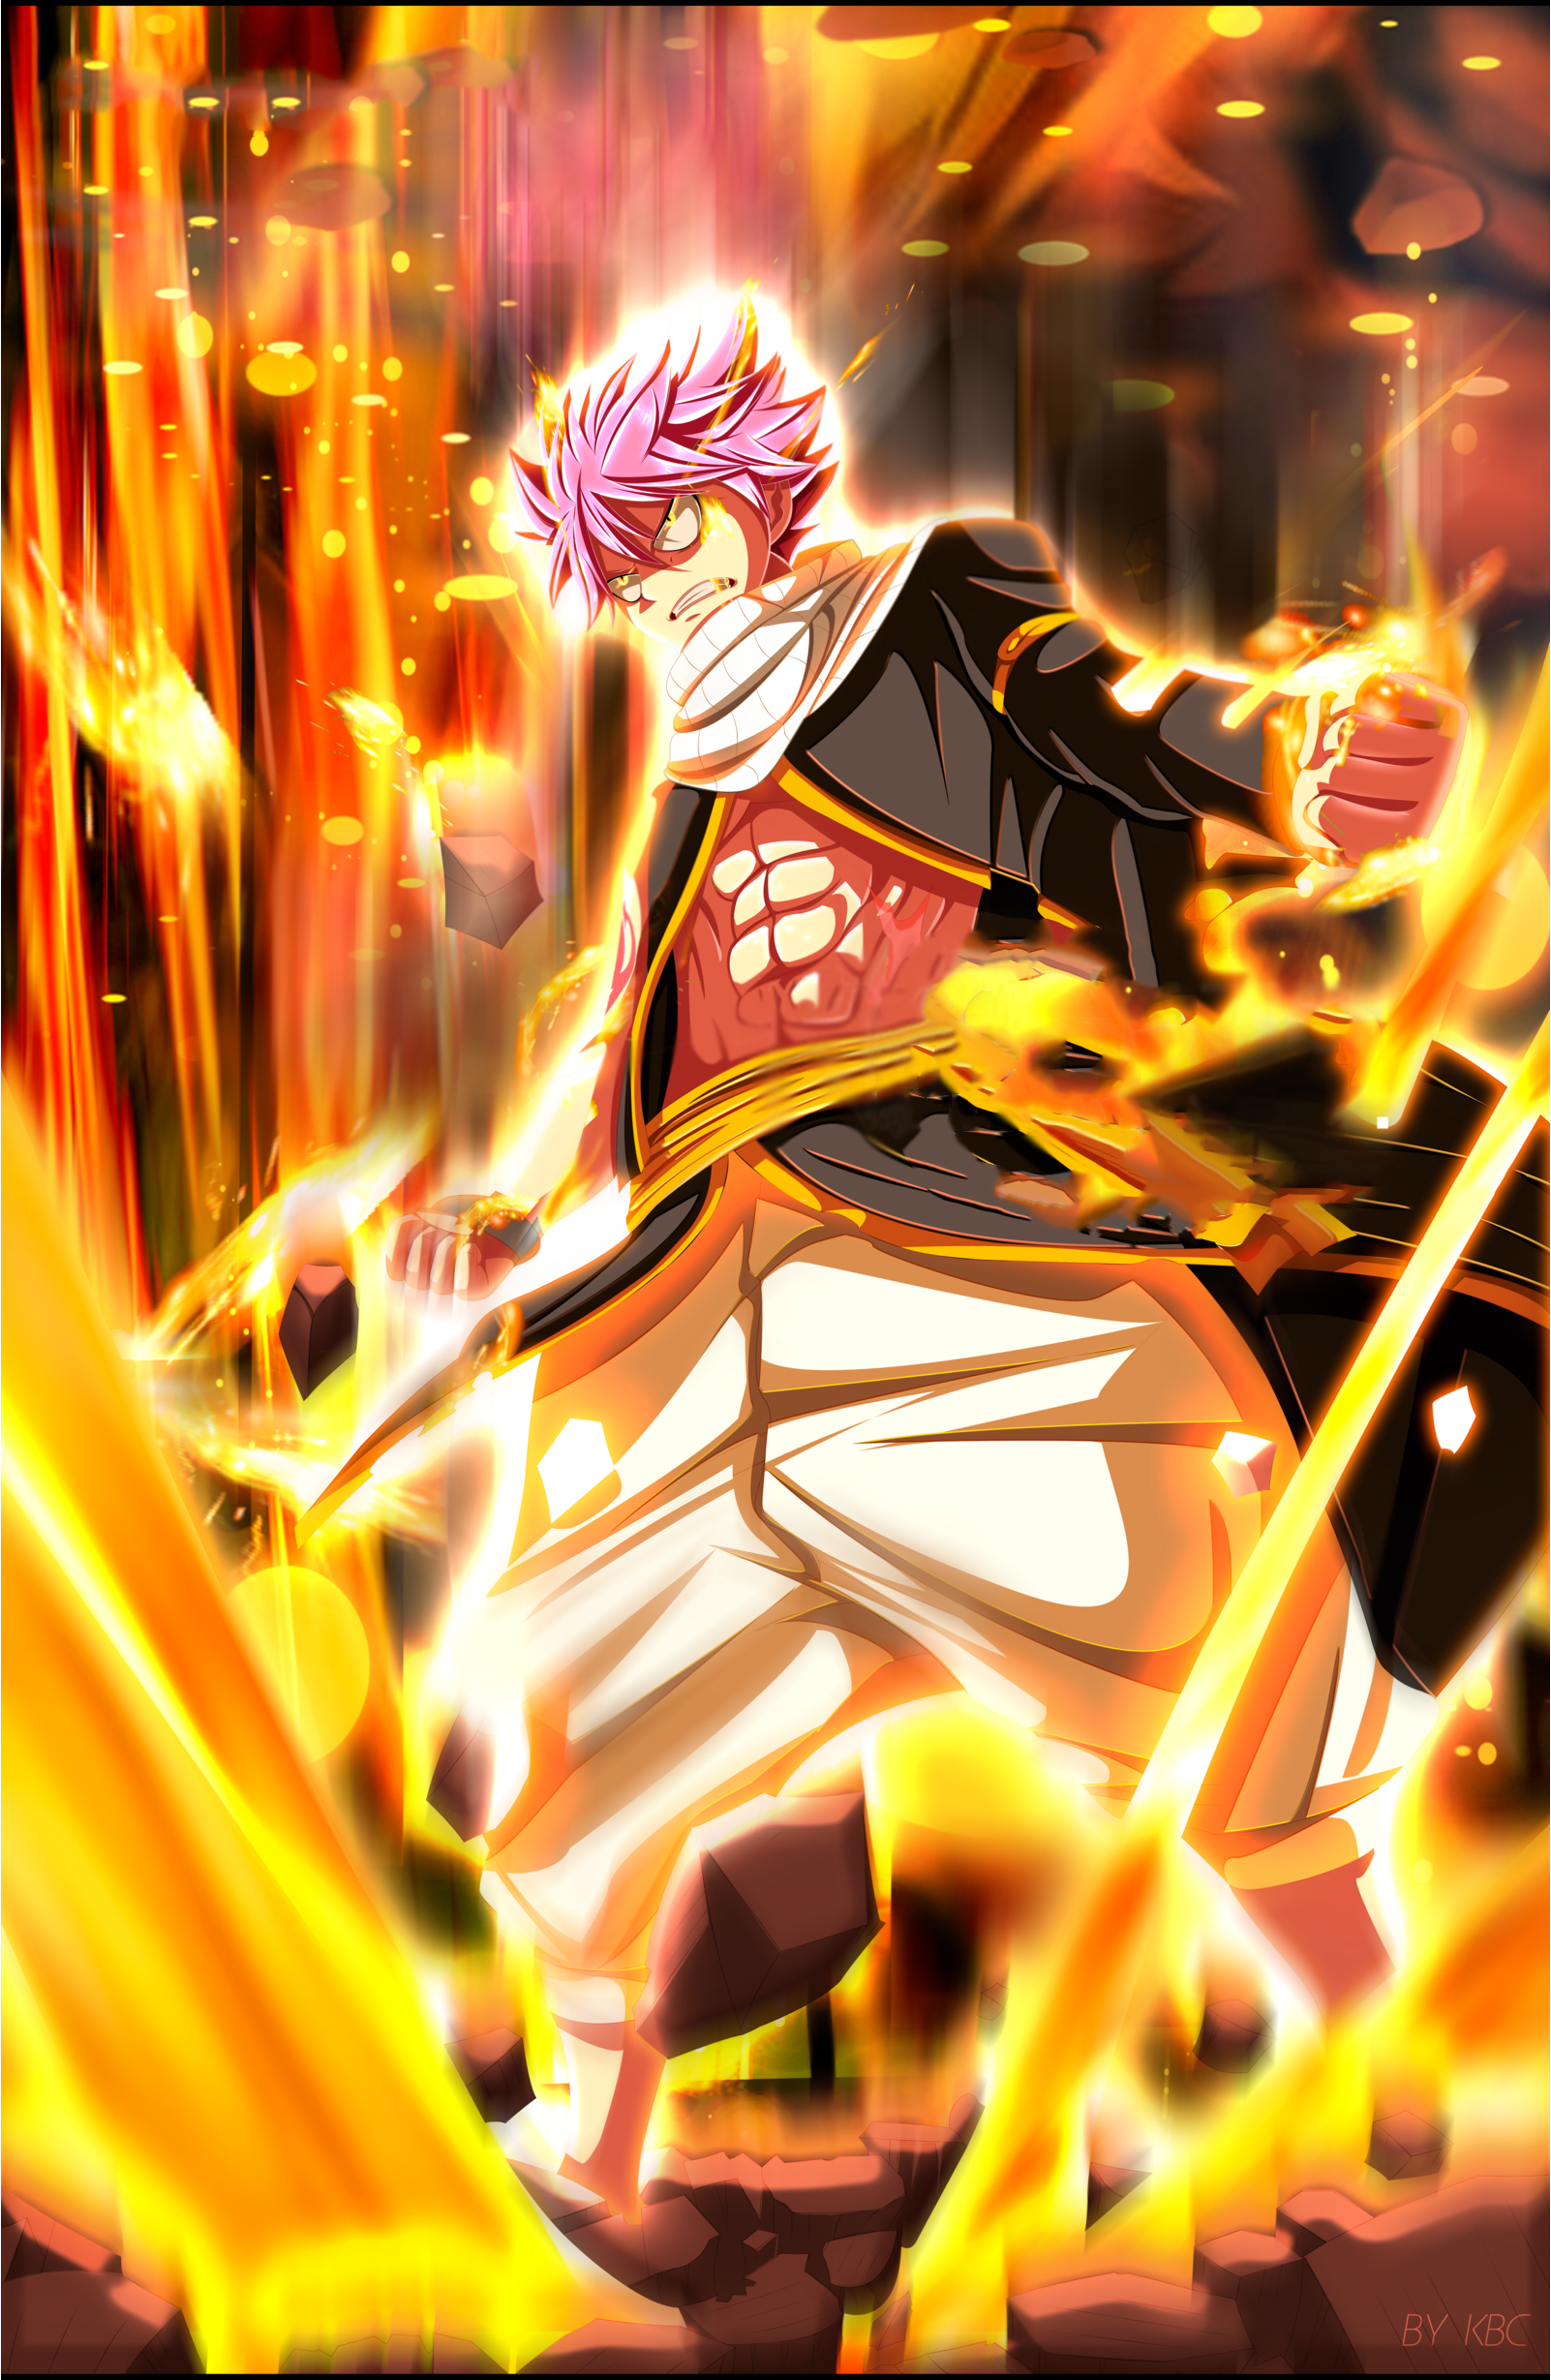 Can Natsu use the Fire Dragon King mode again? - Quora